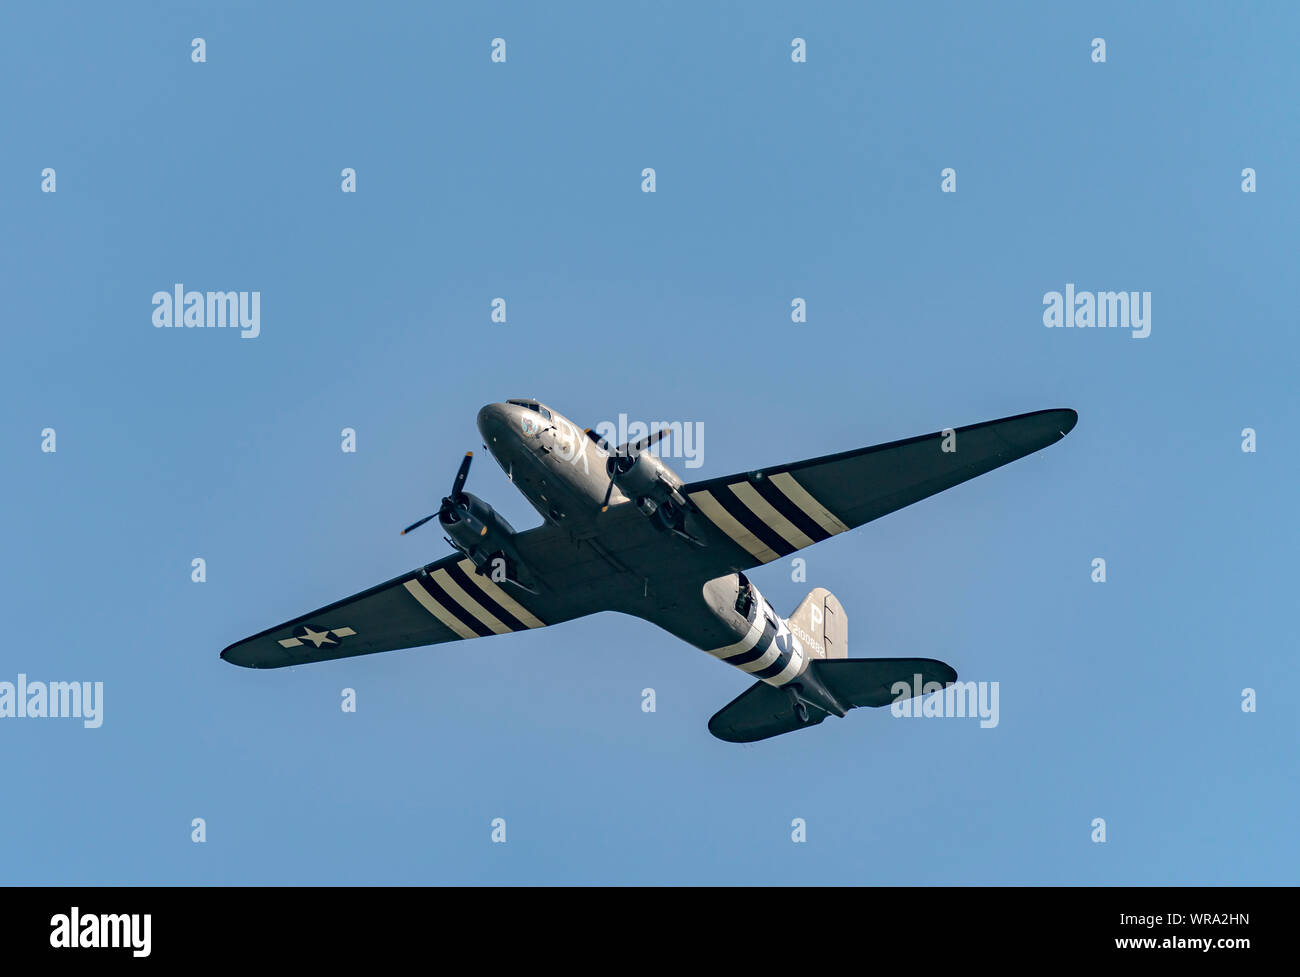 Douglas C-47A Skytrain 2100882 Stockfoto